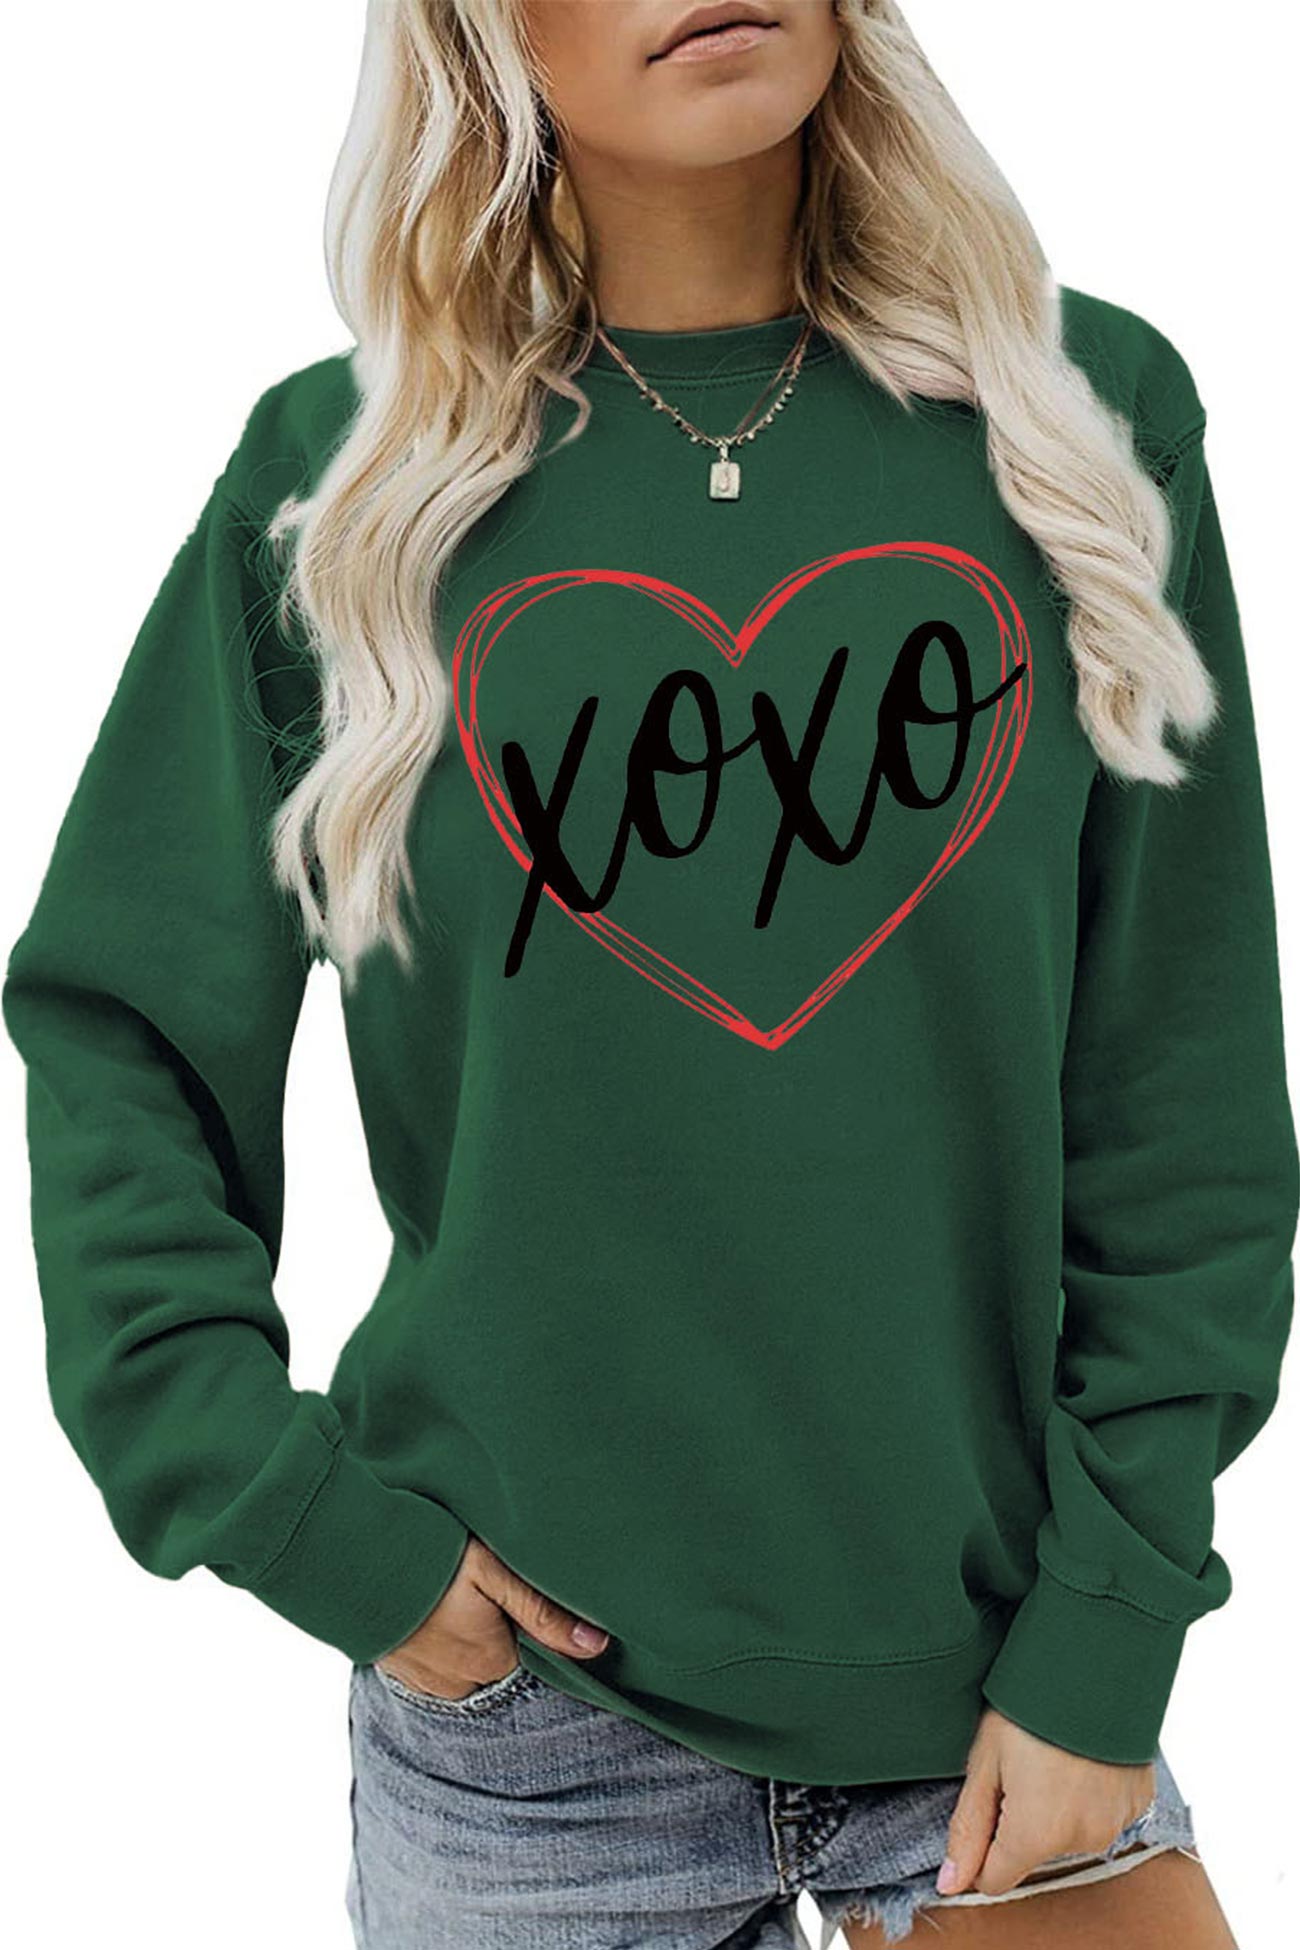 Thin Line Heart Letter Graphic Sweatshirt